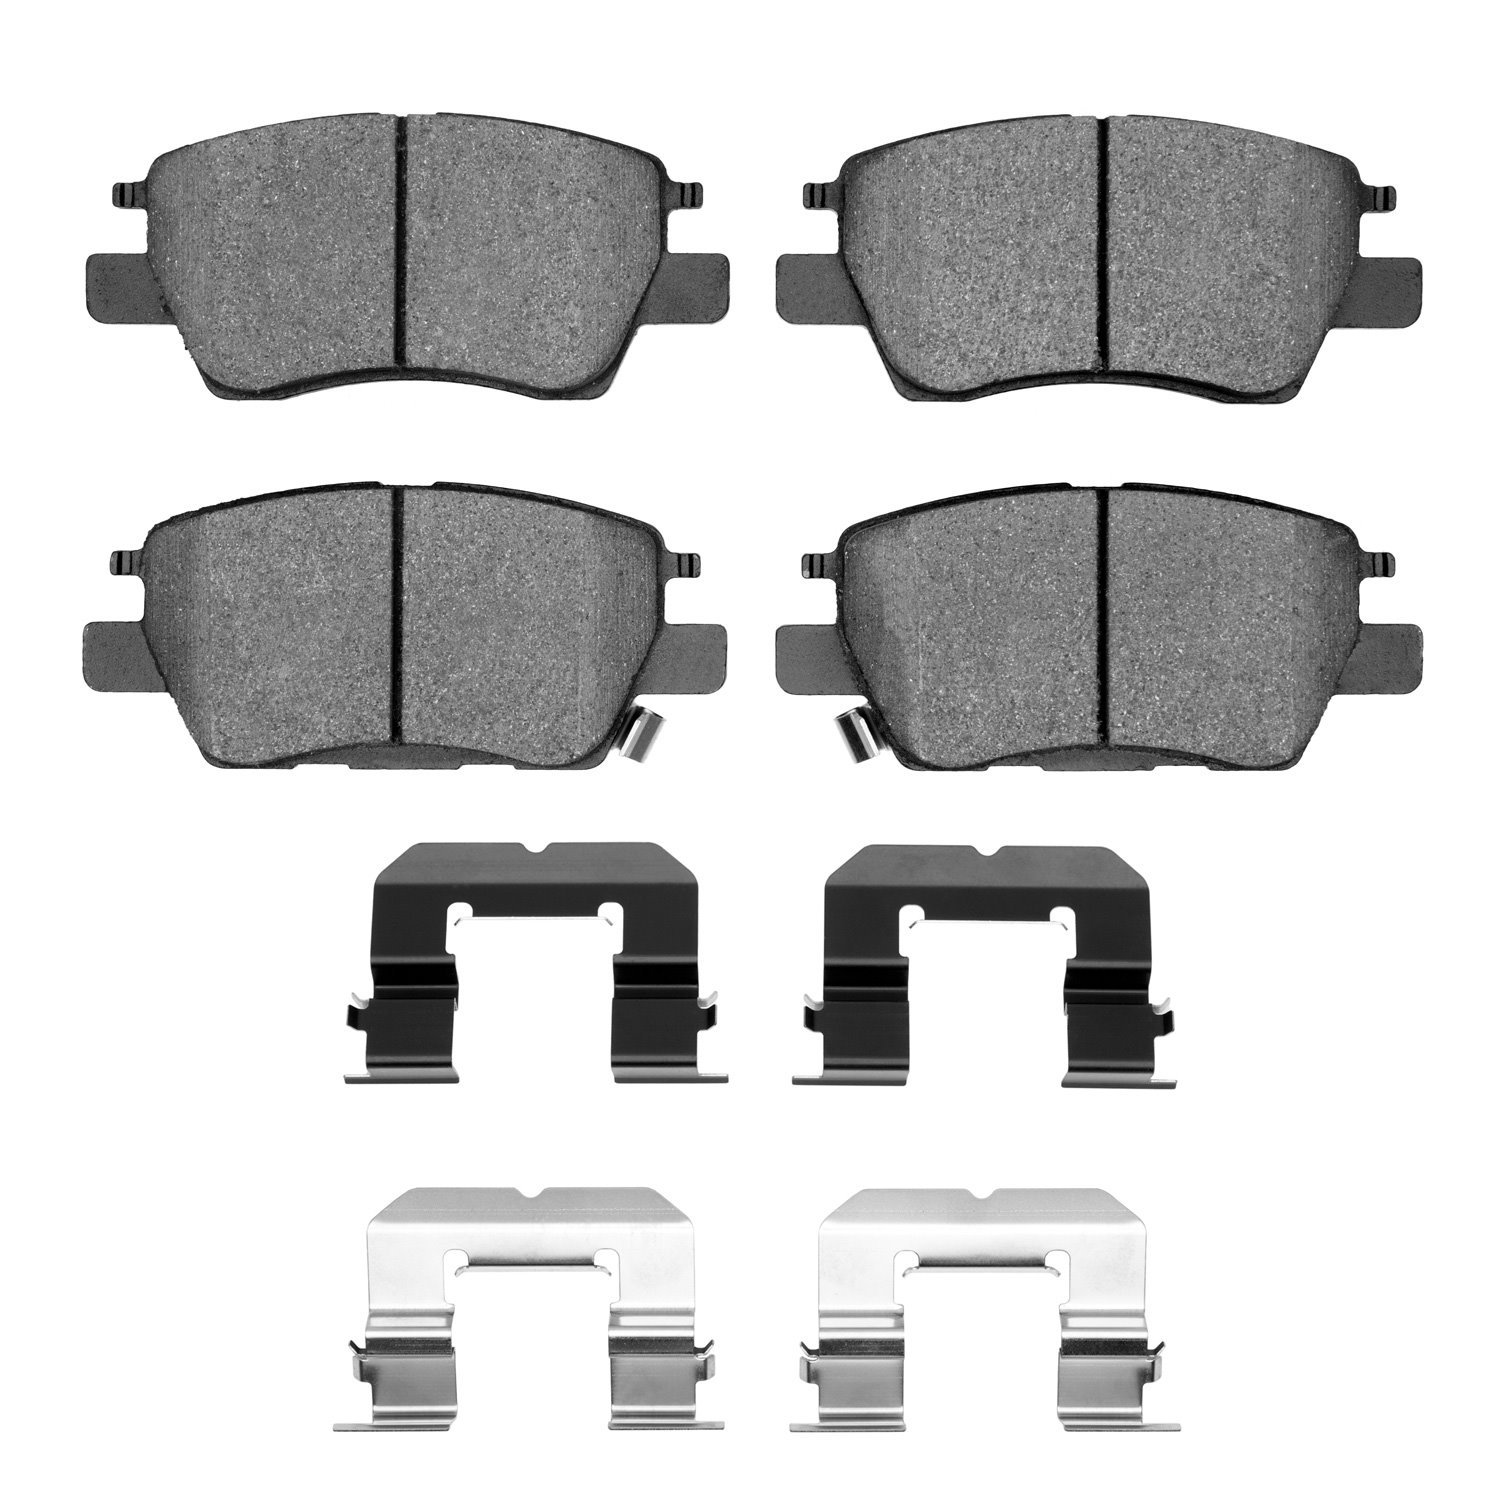 1310-1844-01 3000-Series Ceramic Brake Pads & Hardware Kit, Fits Select GM, Position: Front